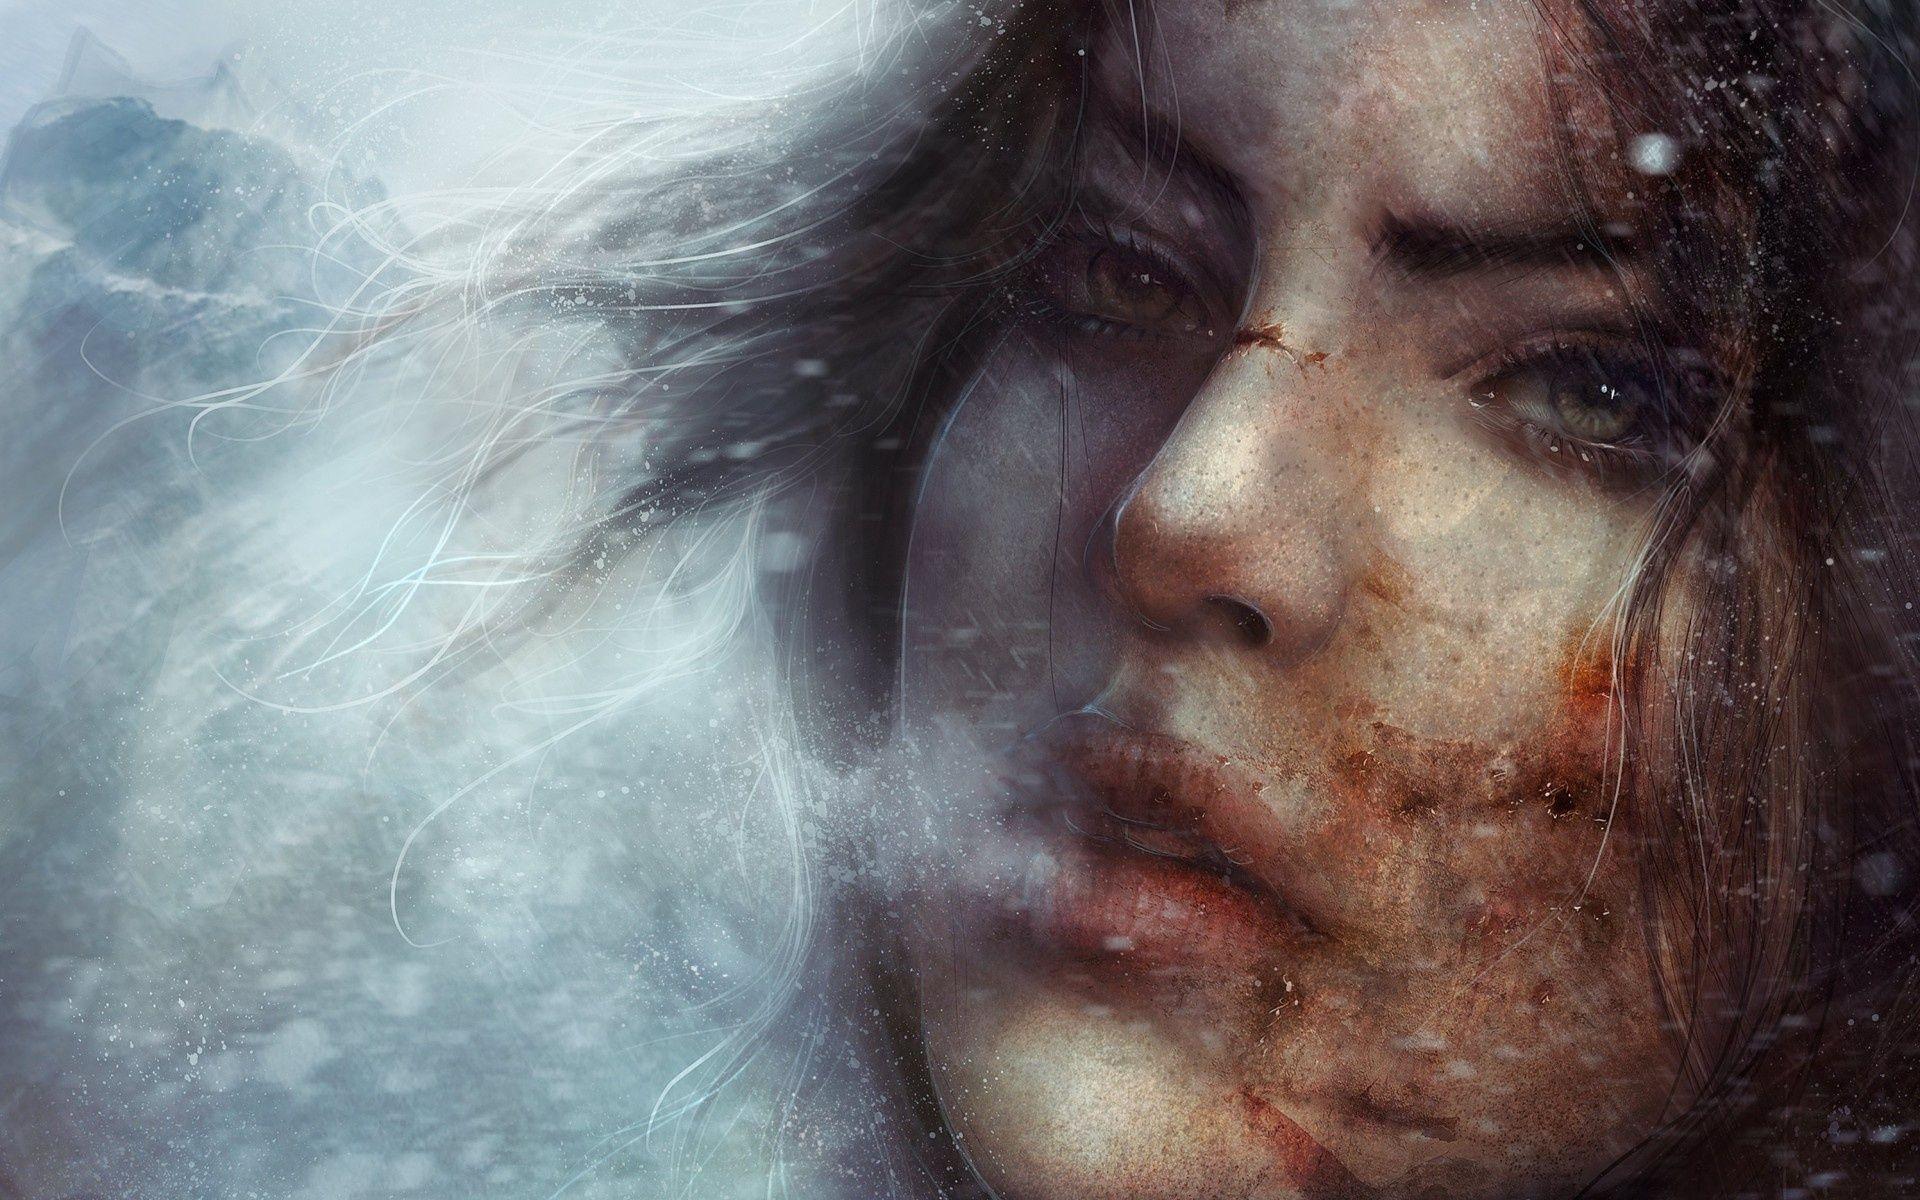 Tomb Raider Wallpaper Video Game Girl Lara Croft Warrior Face